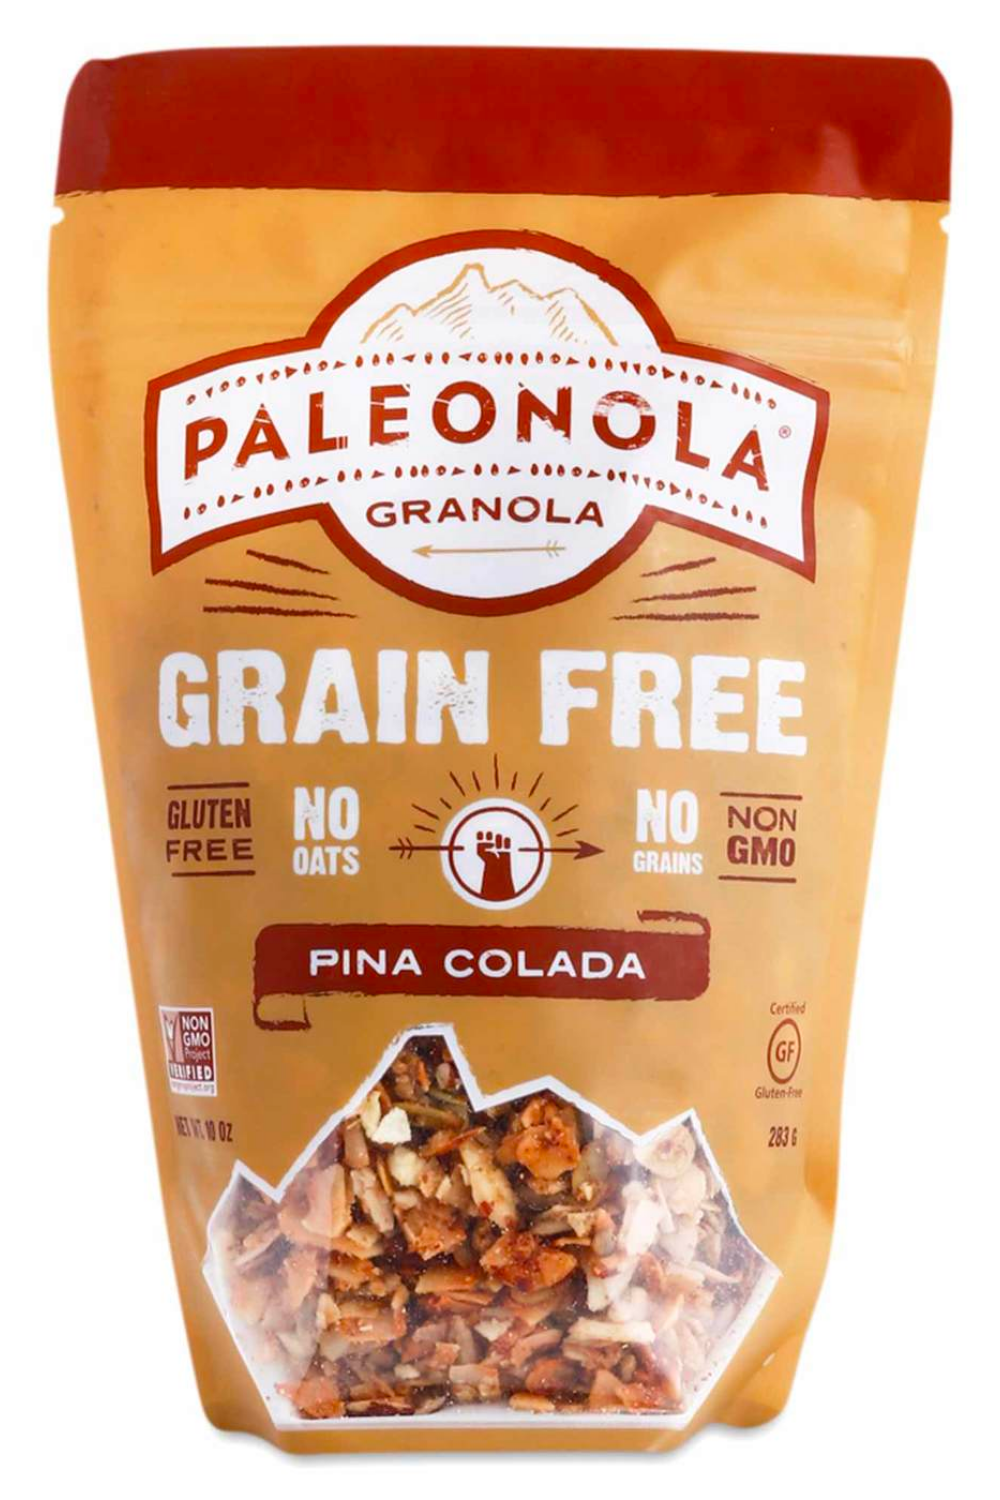 Paleonola Granola - Pina Colada, Pina Colada, 10 oz, bag